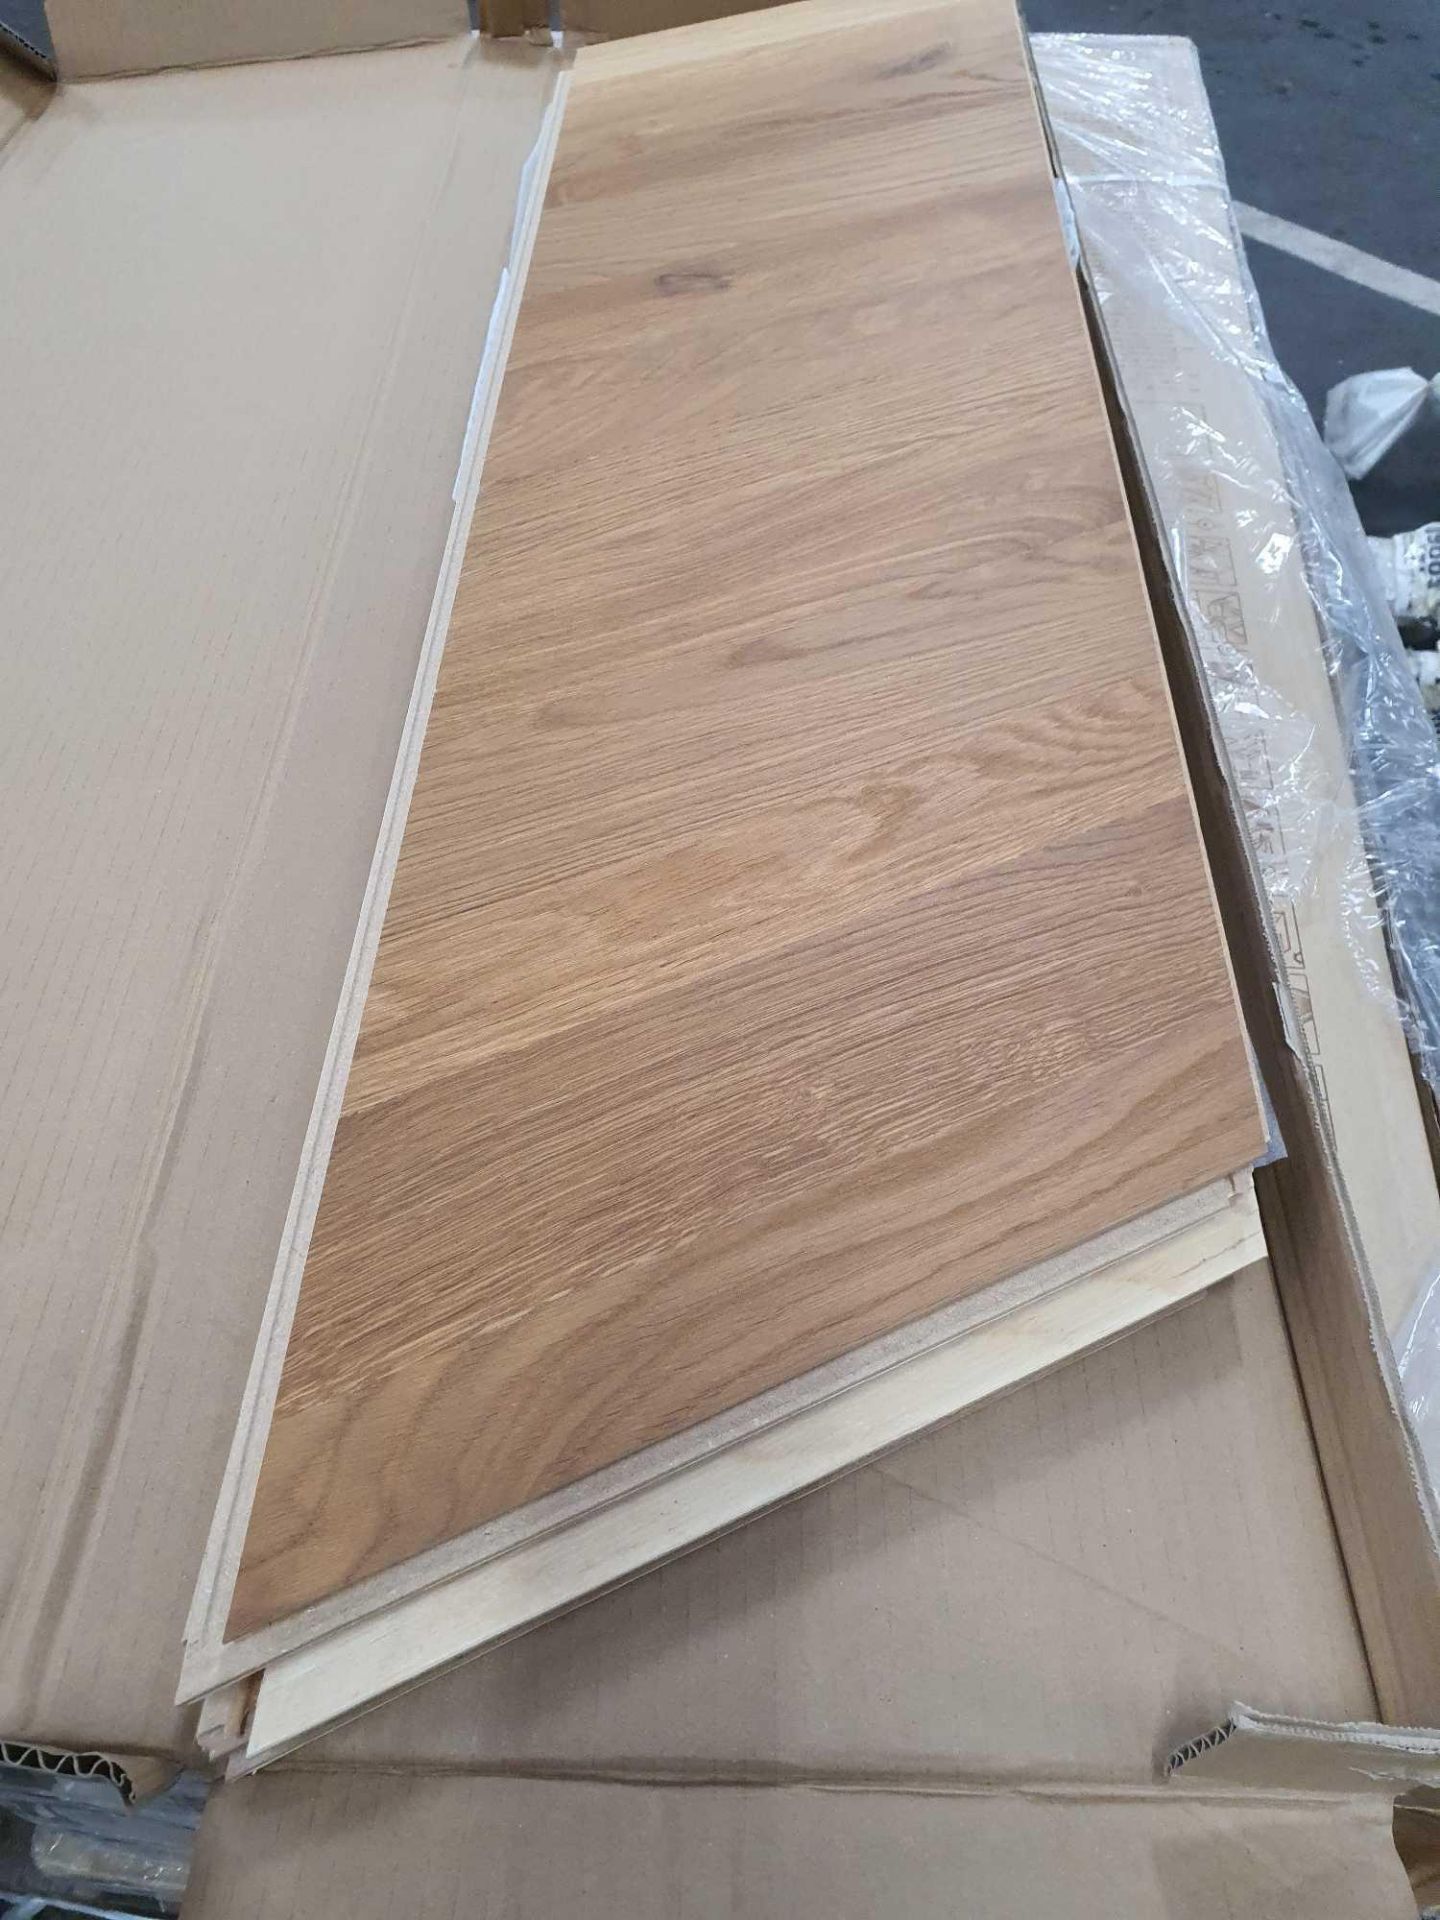 5 Boxes Of Quick Step Parquet Hardwood Flooring 1 Box Civers 1.302m2 - Image 5 of 5